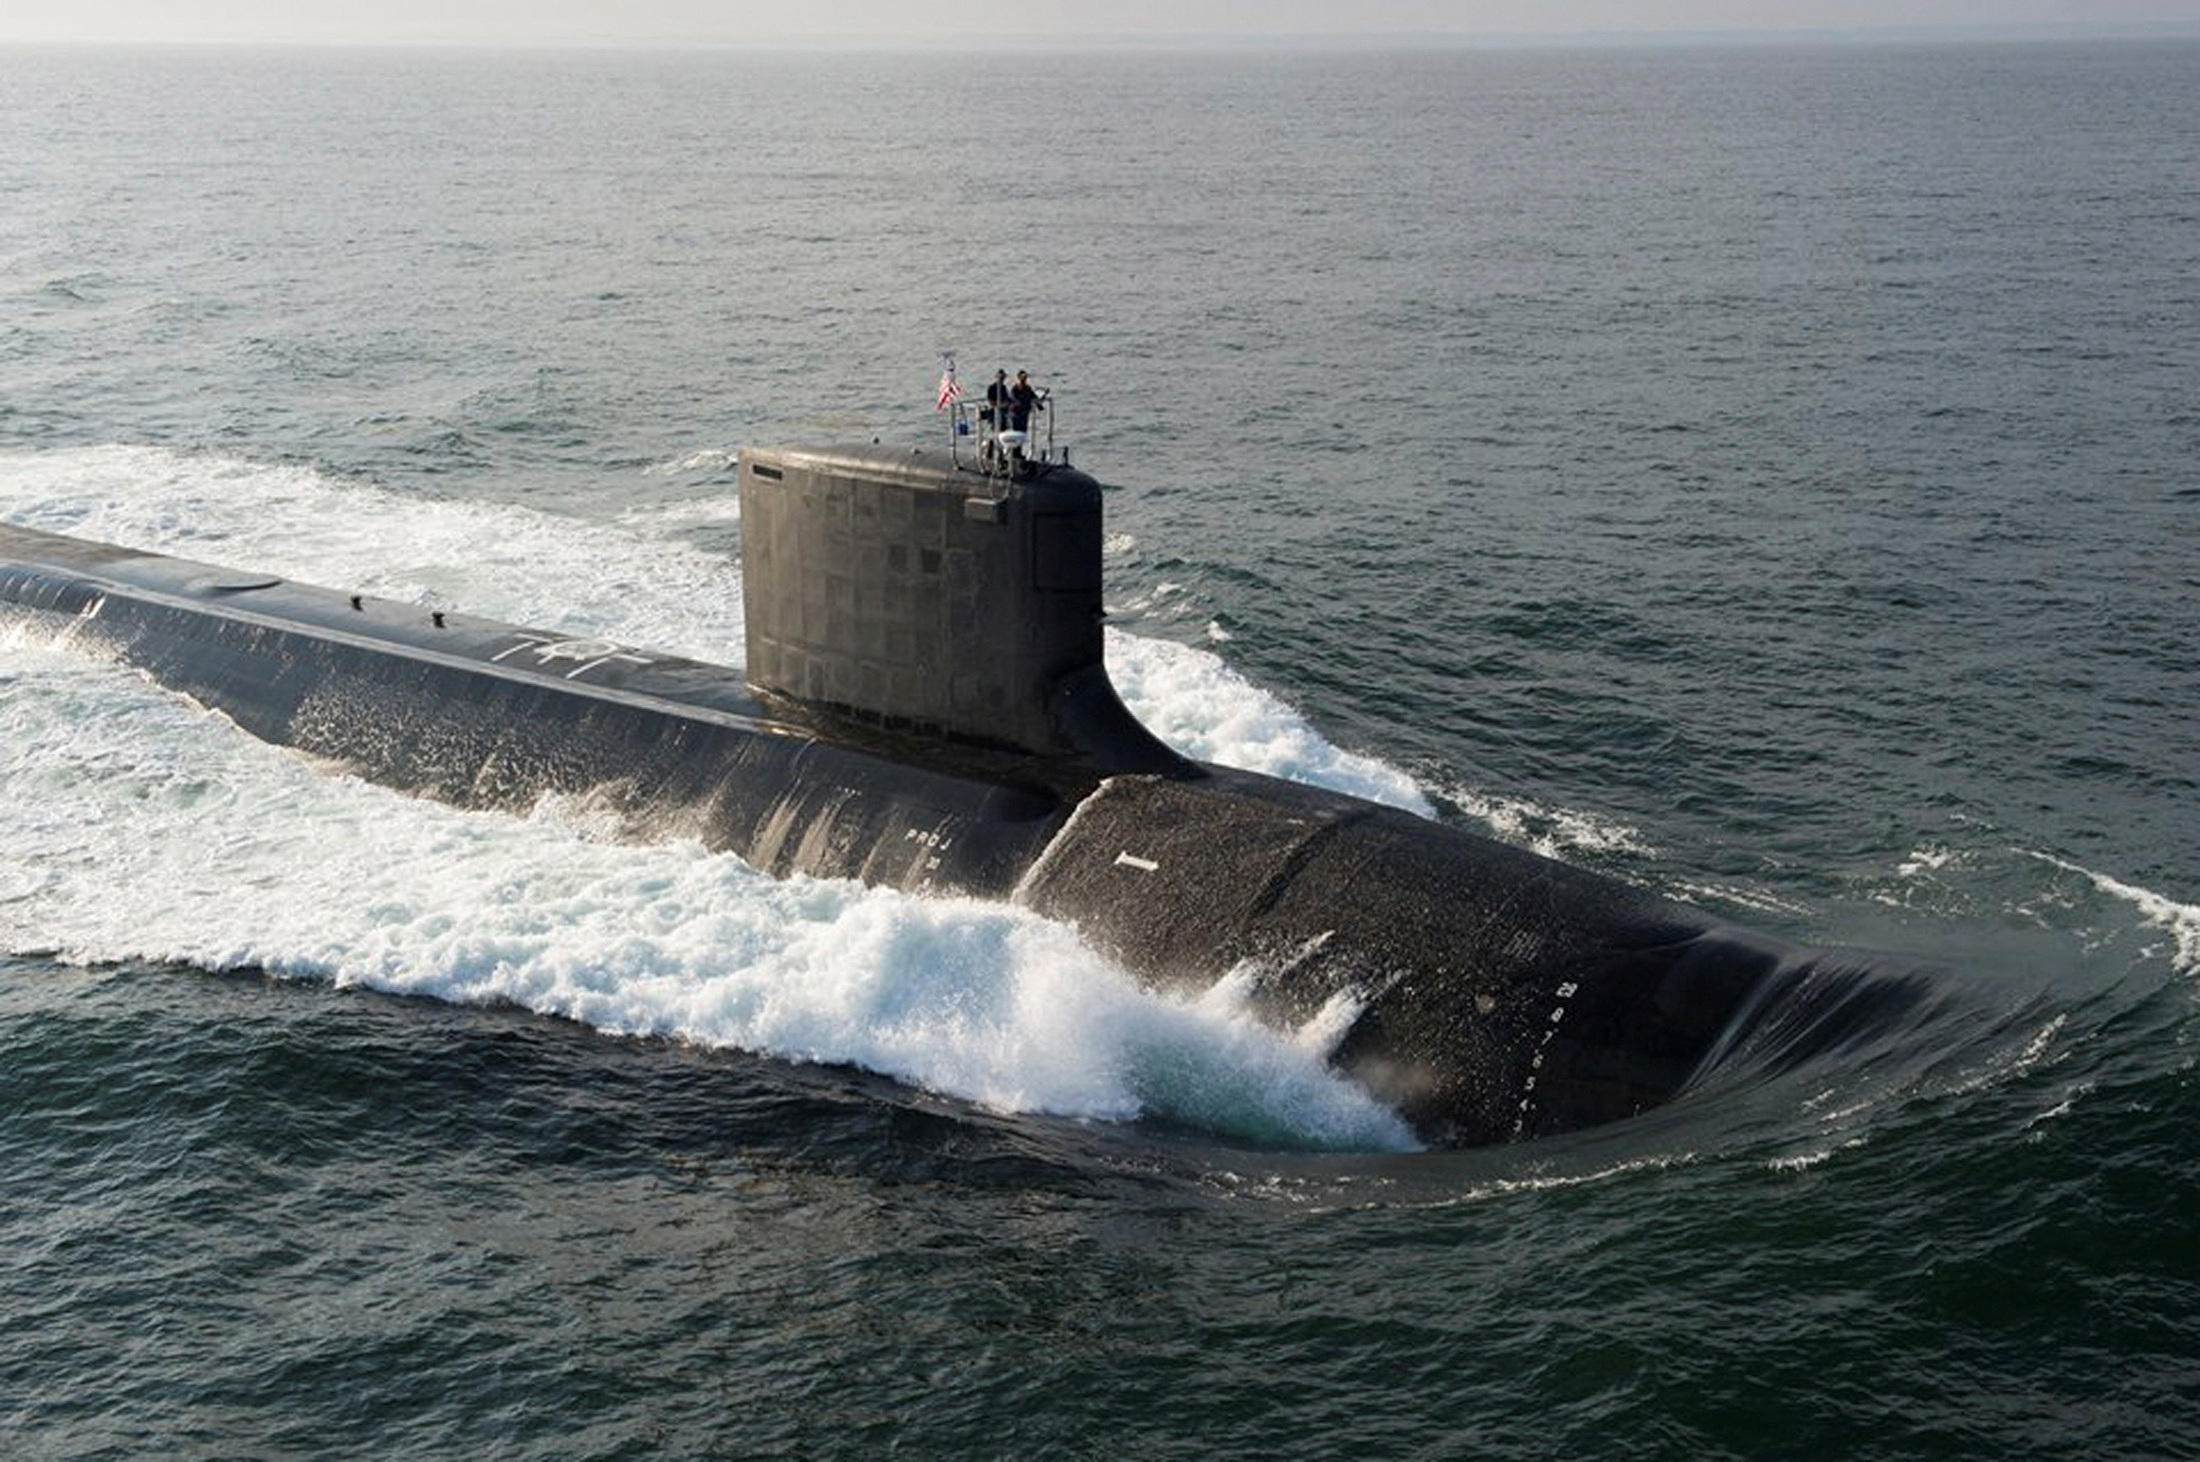 The Virginia-class USS North Dakota submarine is seen during bravo sea trials in this U.S. Navy handout picture